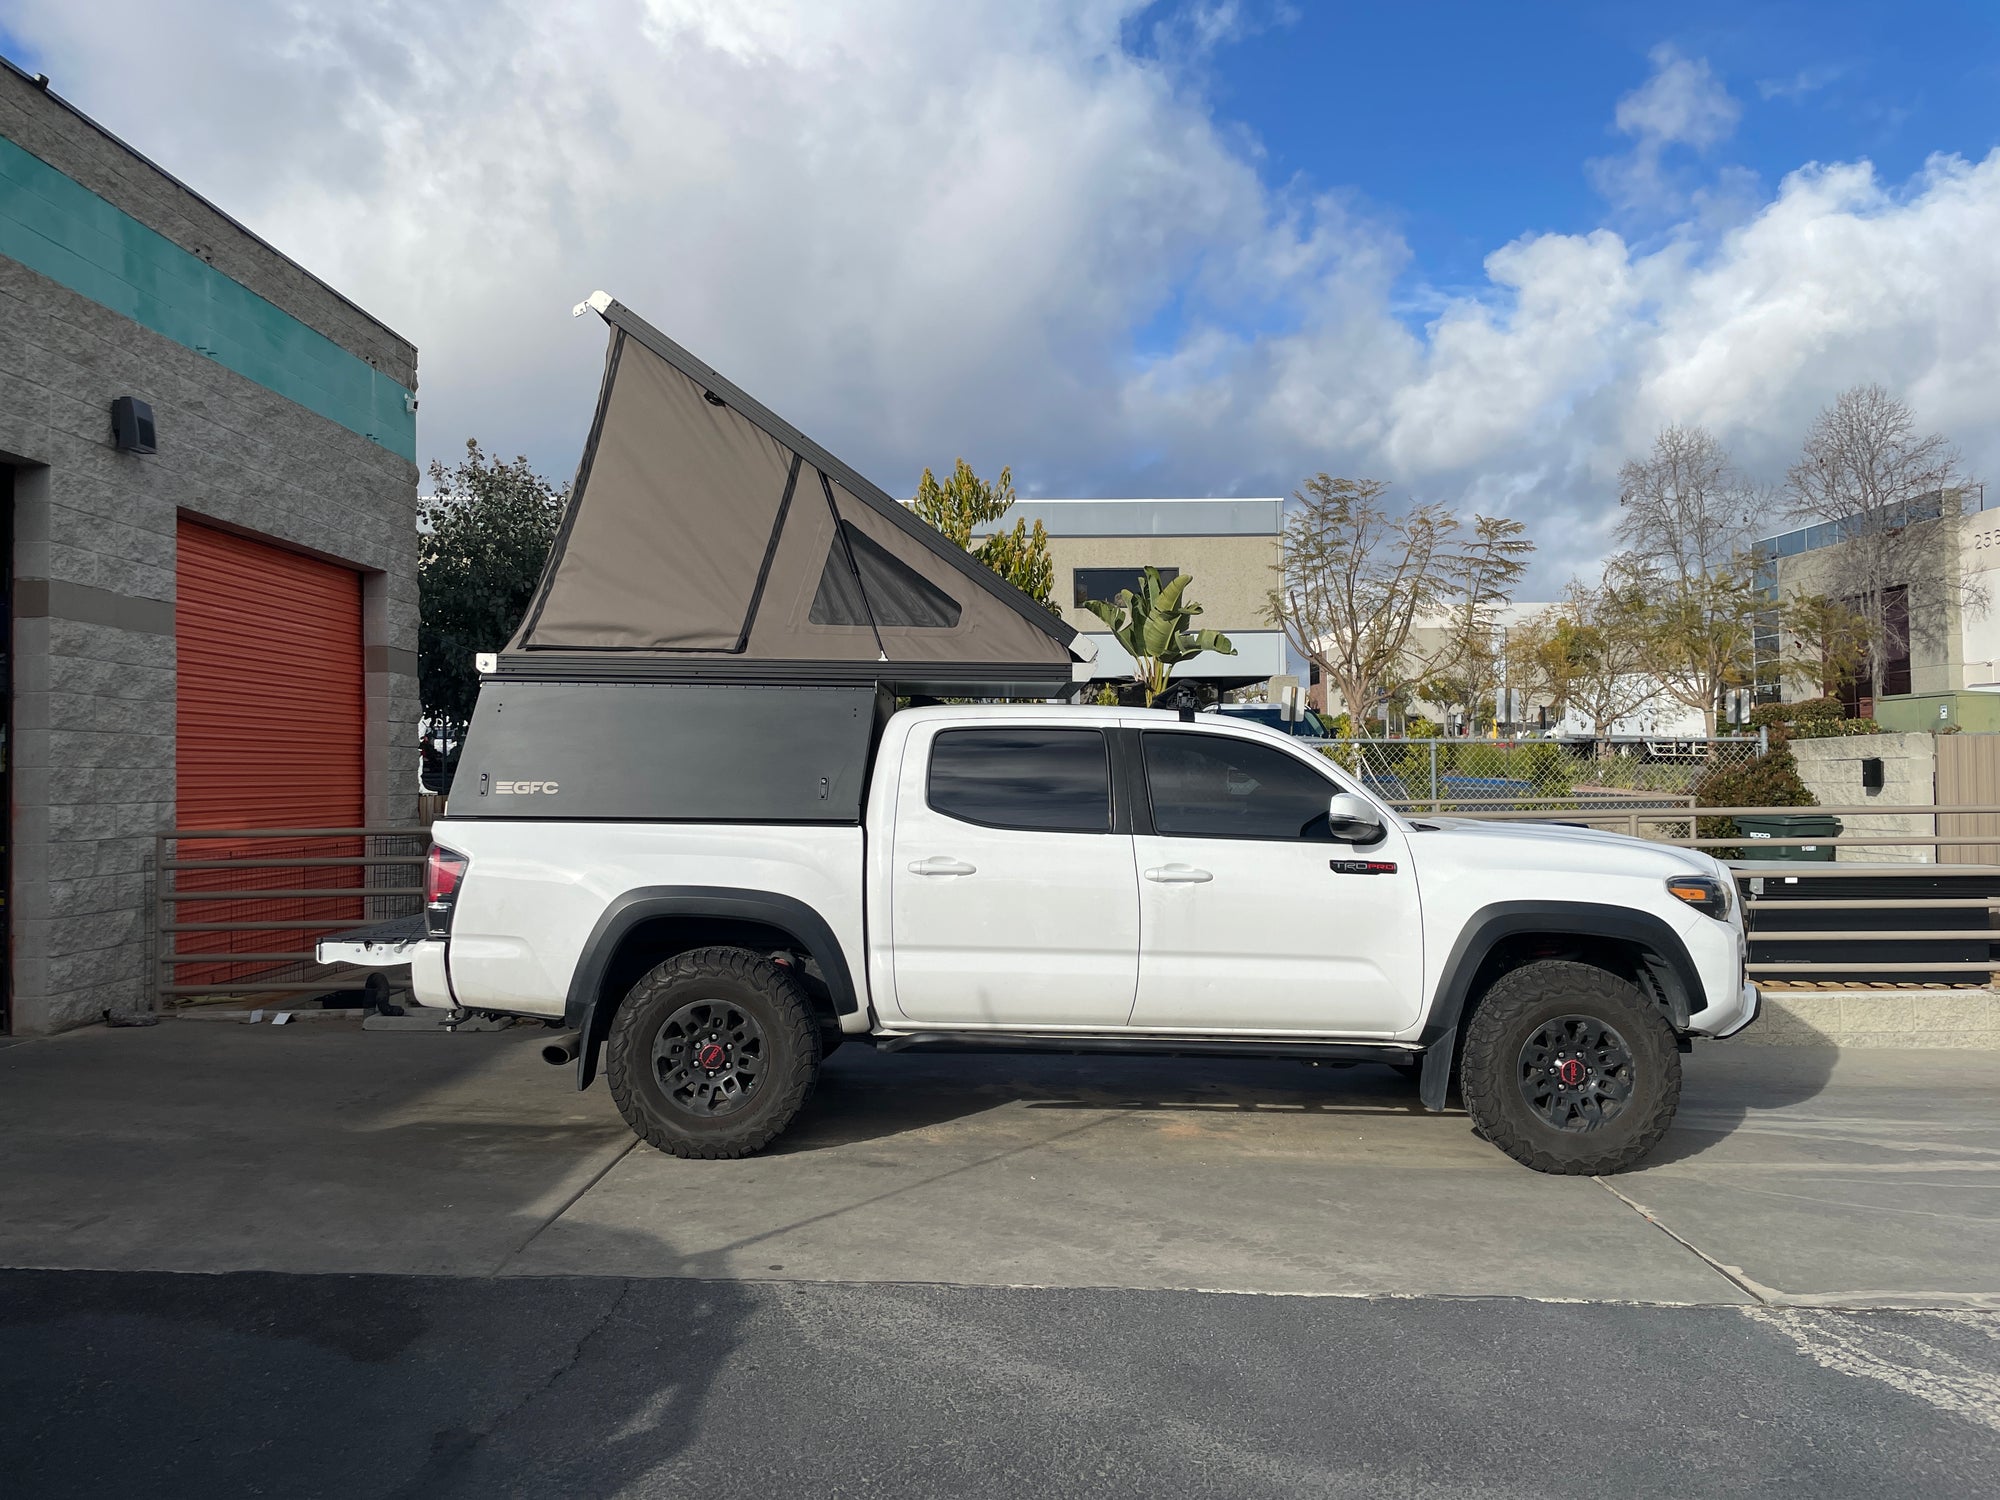 2019 Toyota Tacoma Camper - Build #4849